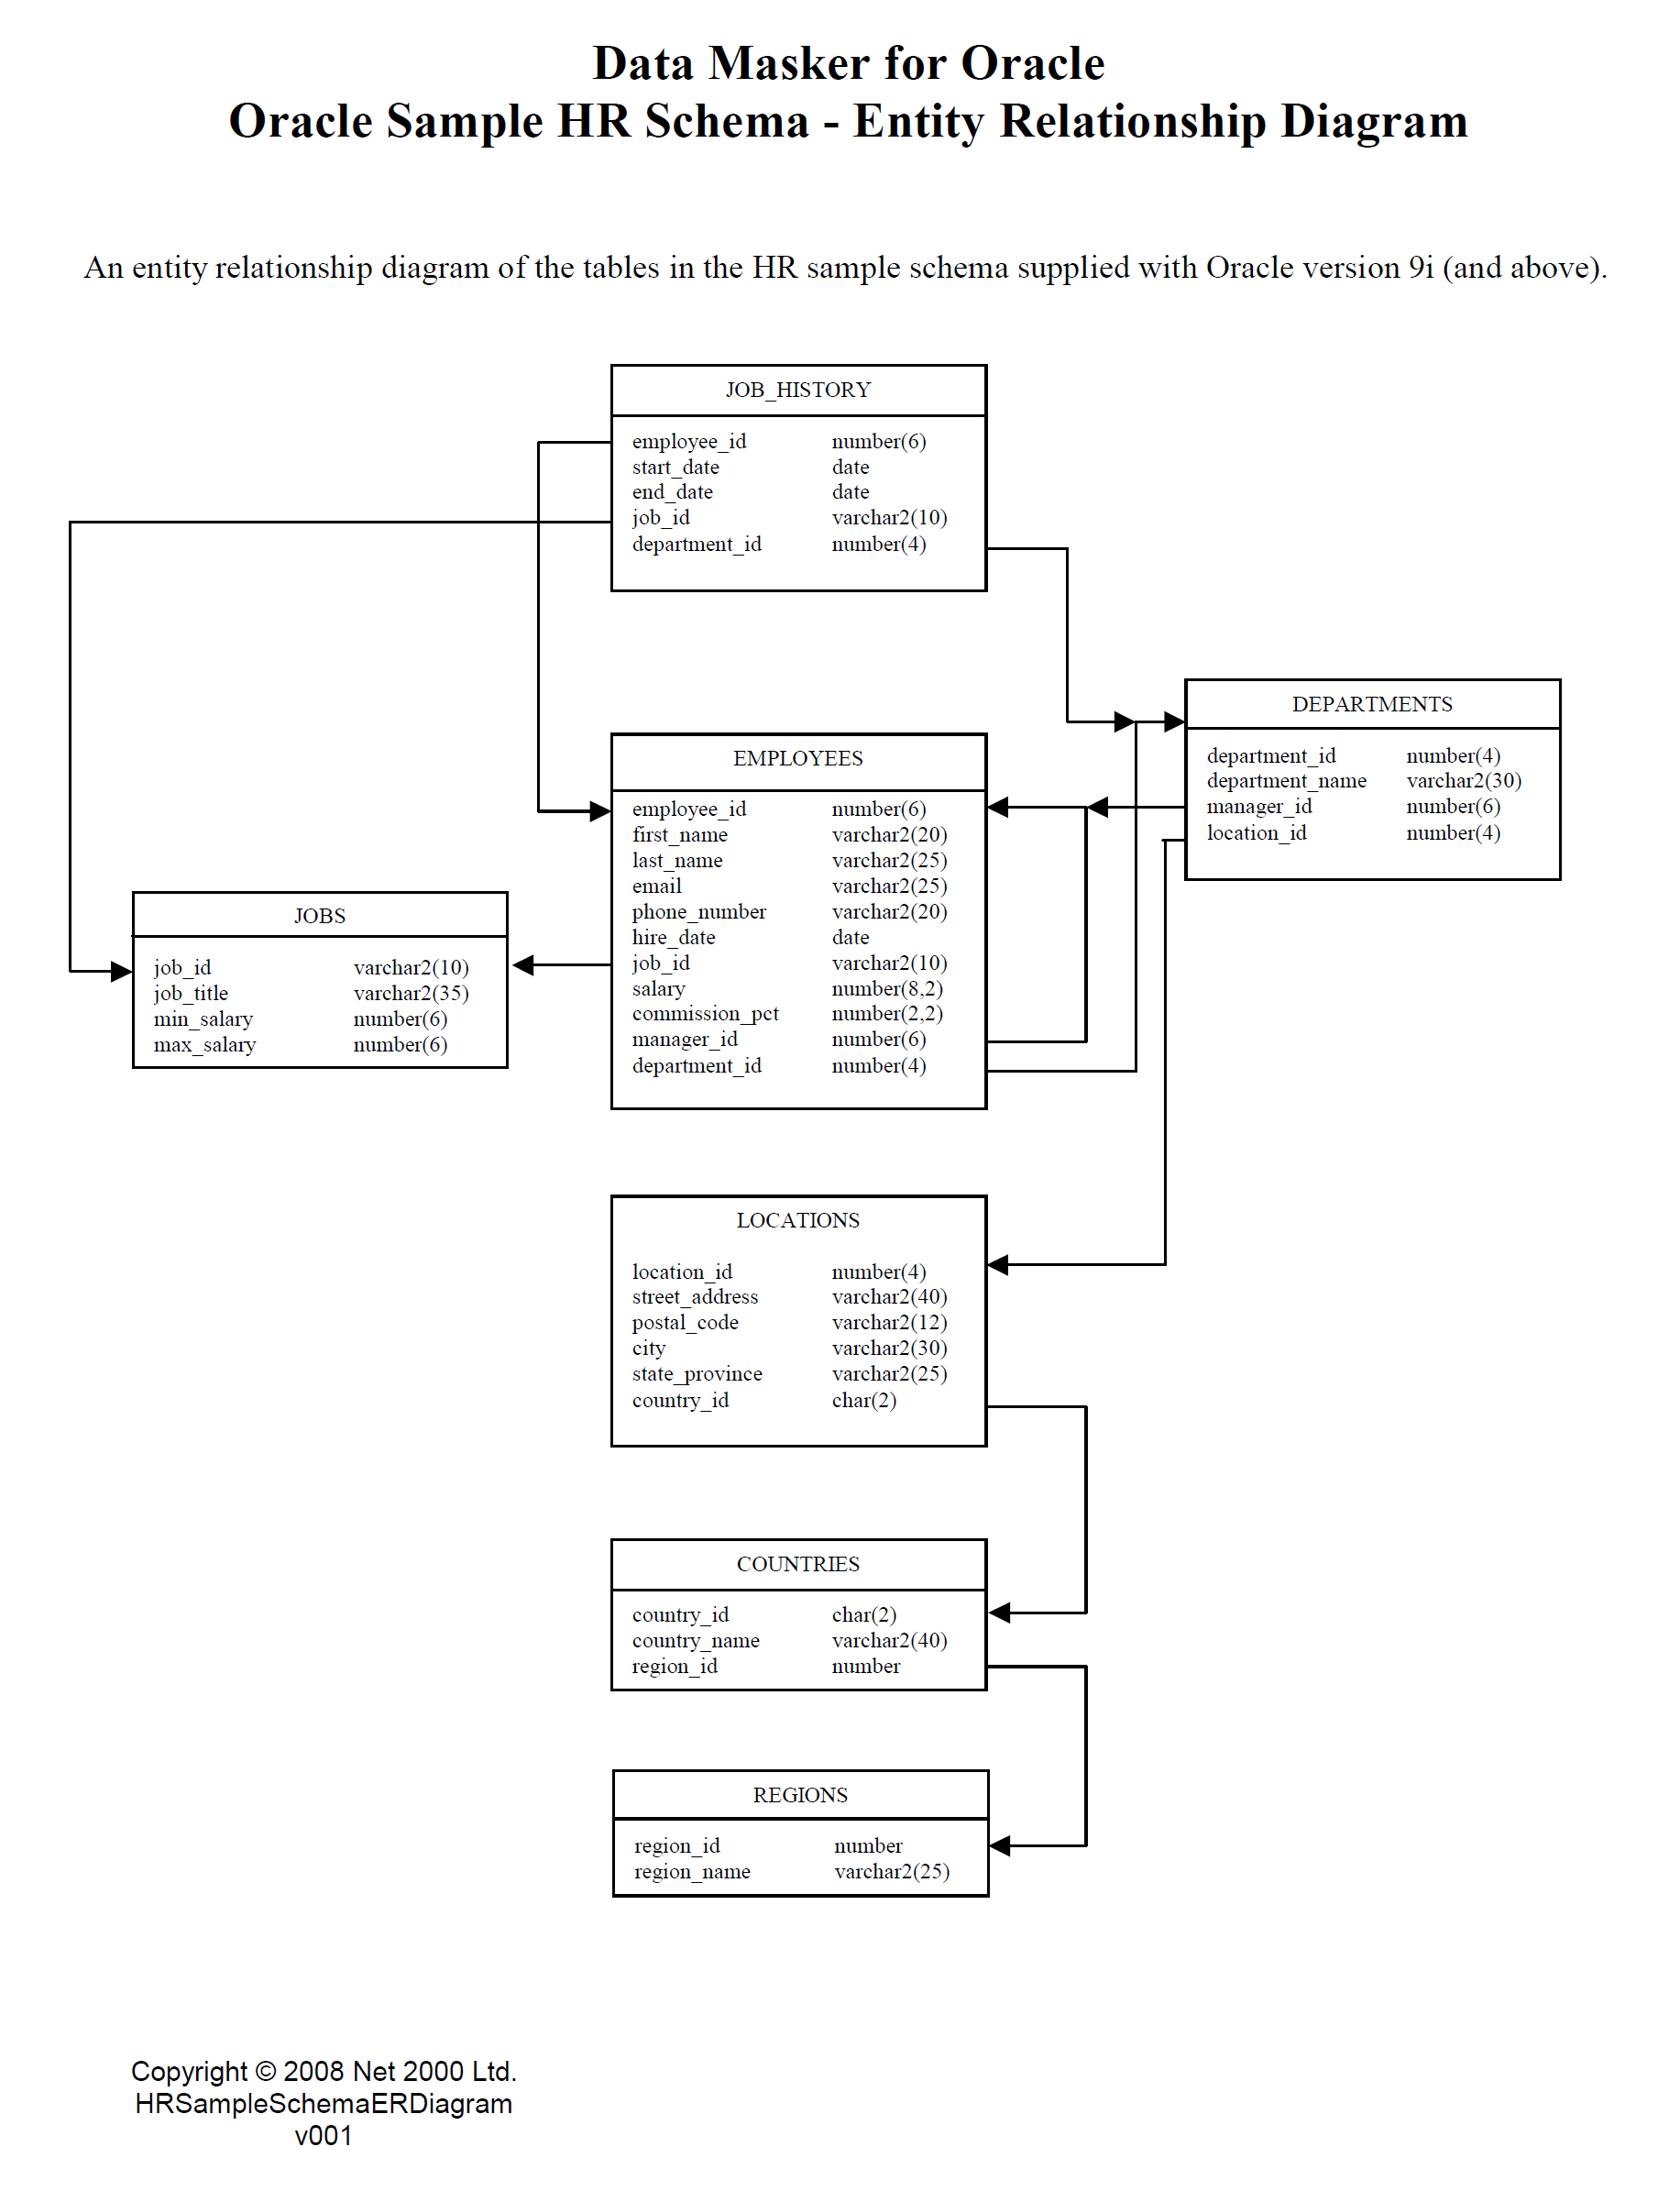 An ER Diagram for the HR Sample schema Data Masker for Oracle 5